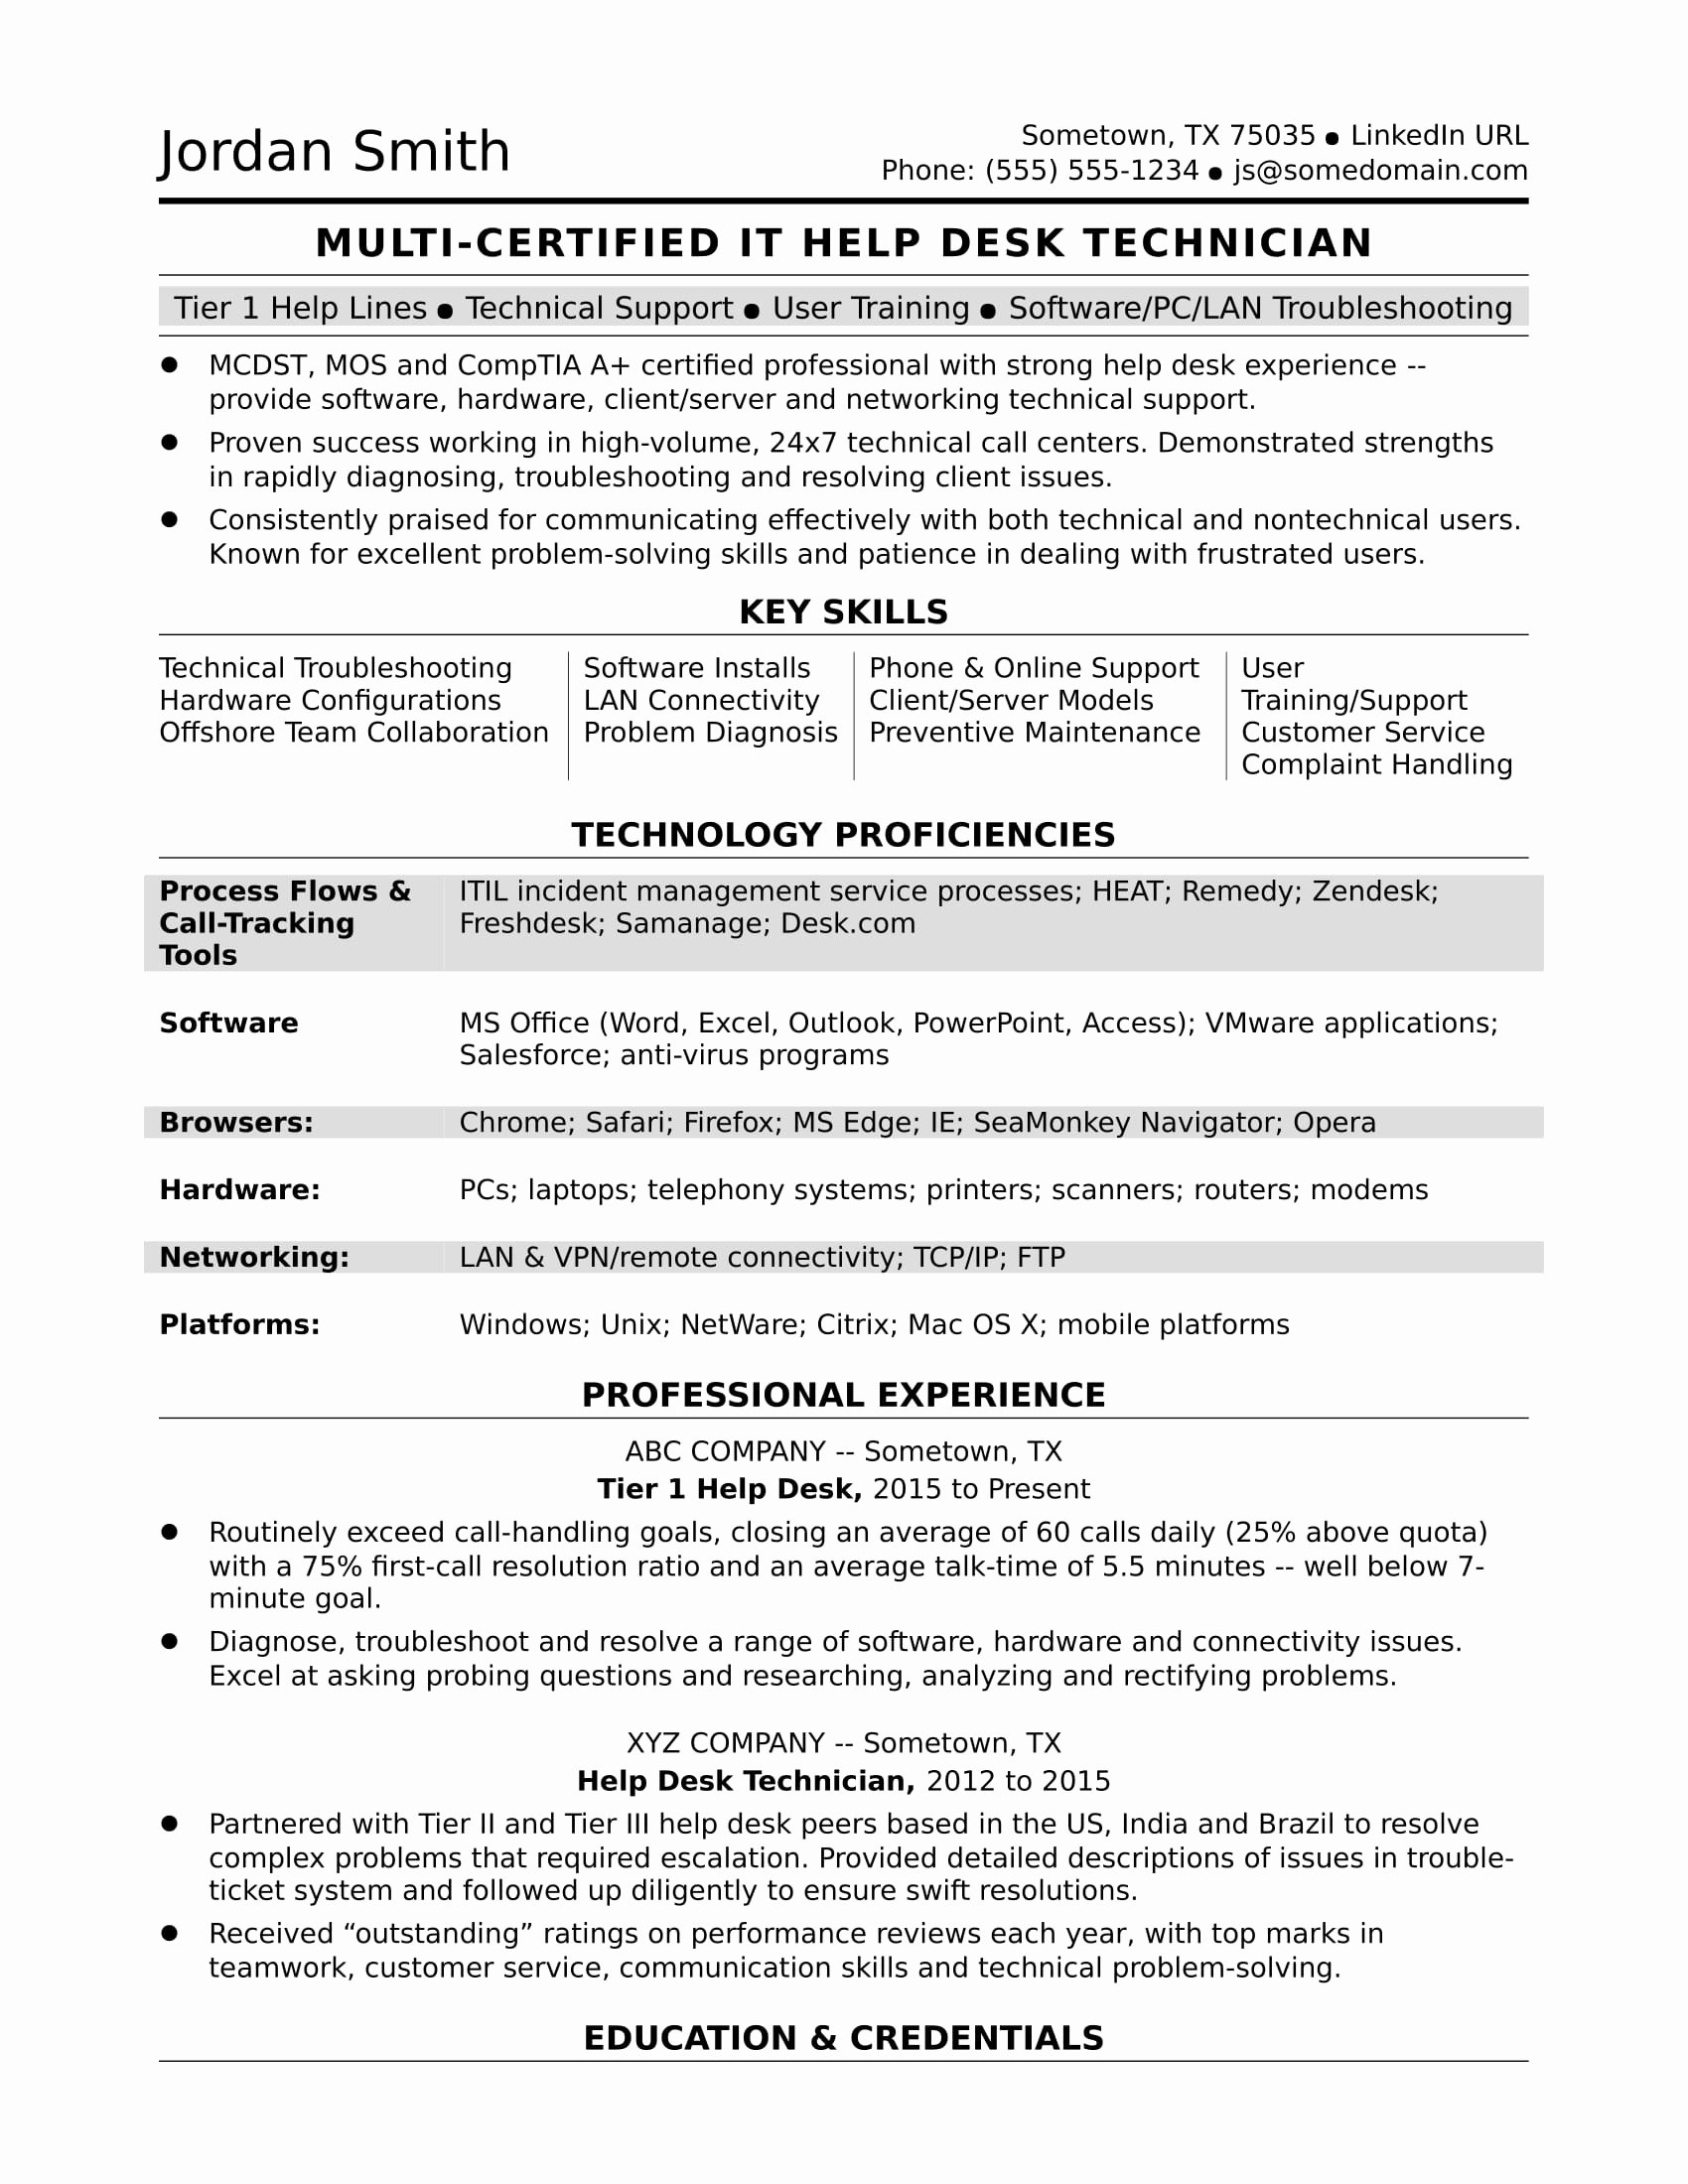 Sample Resume for A Midlevel It Help Desk Professional